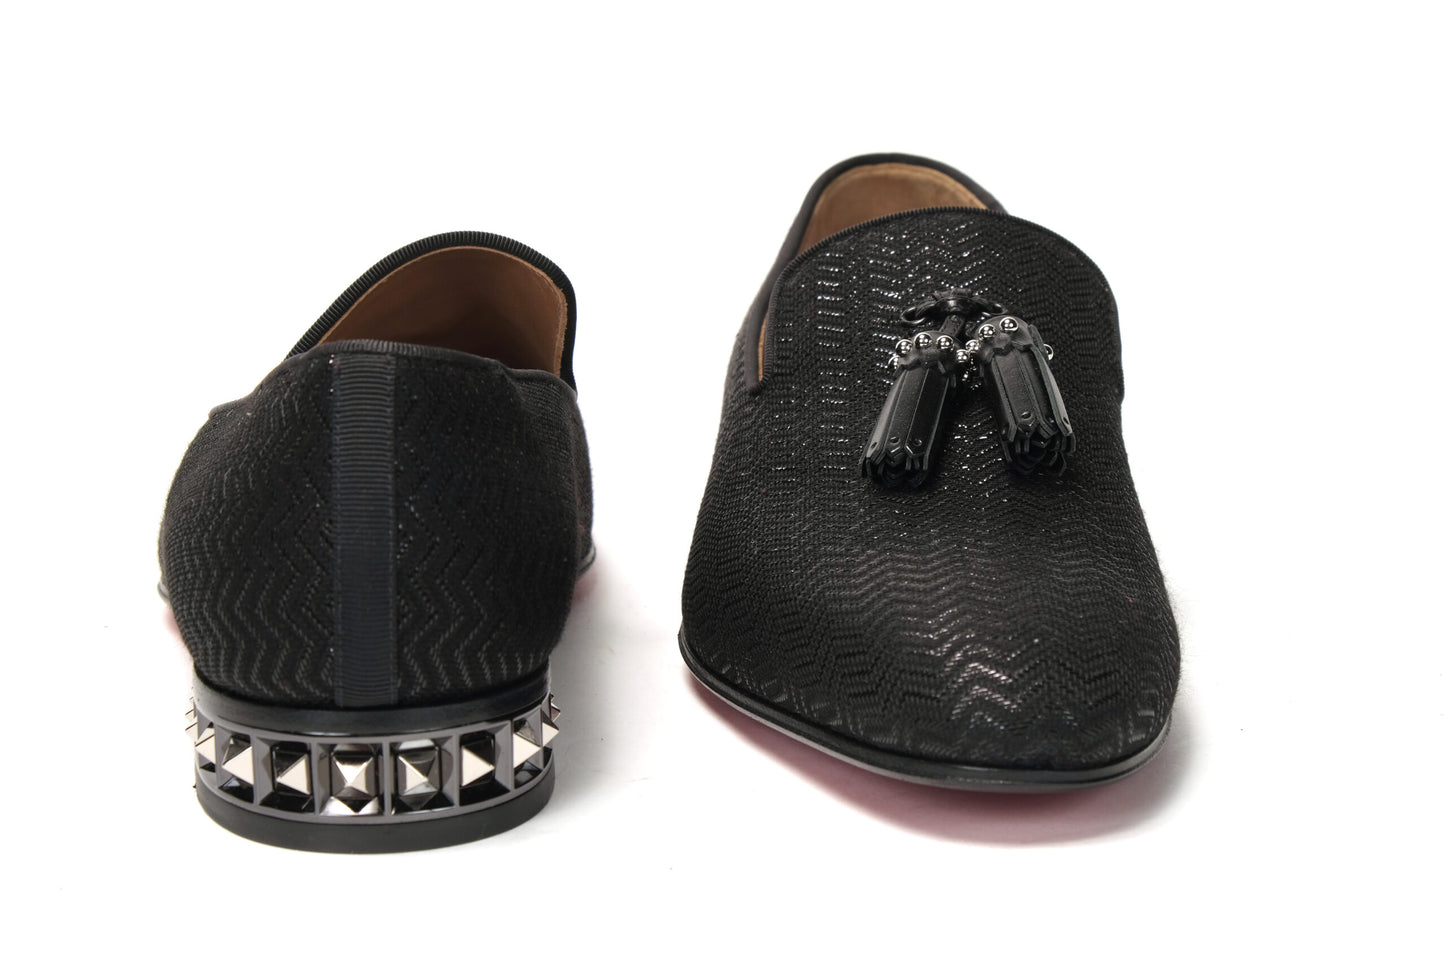 Black Marpyramidetassel Flat Shoes